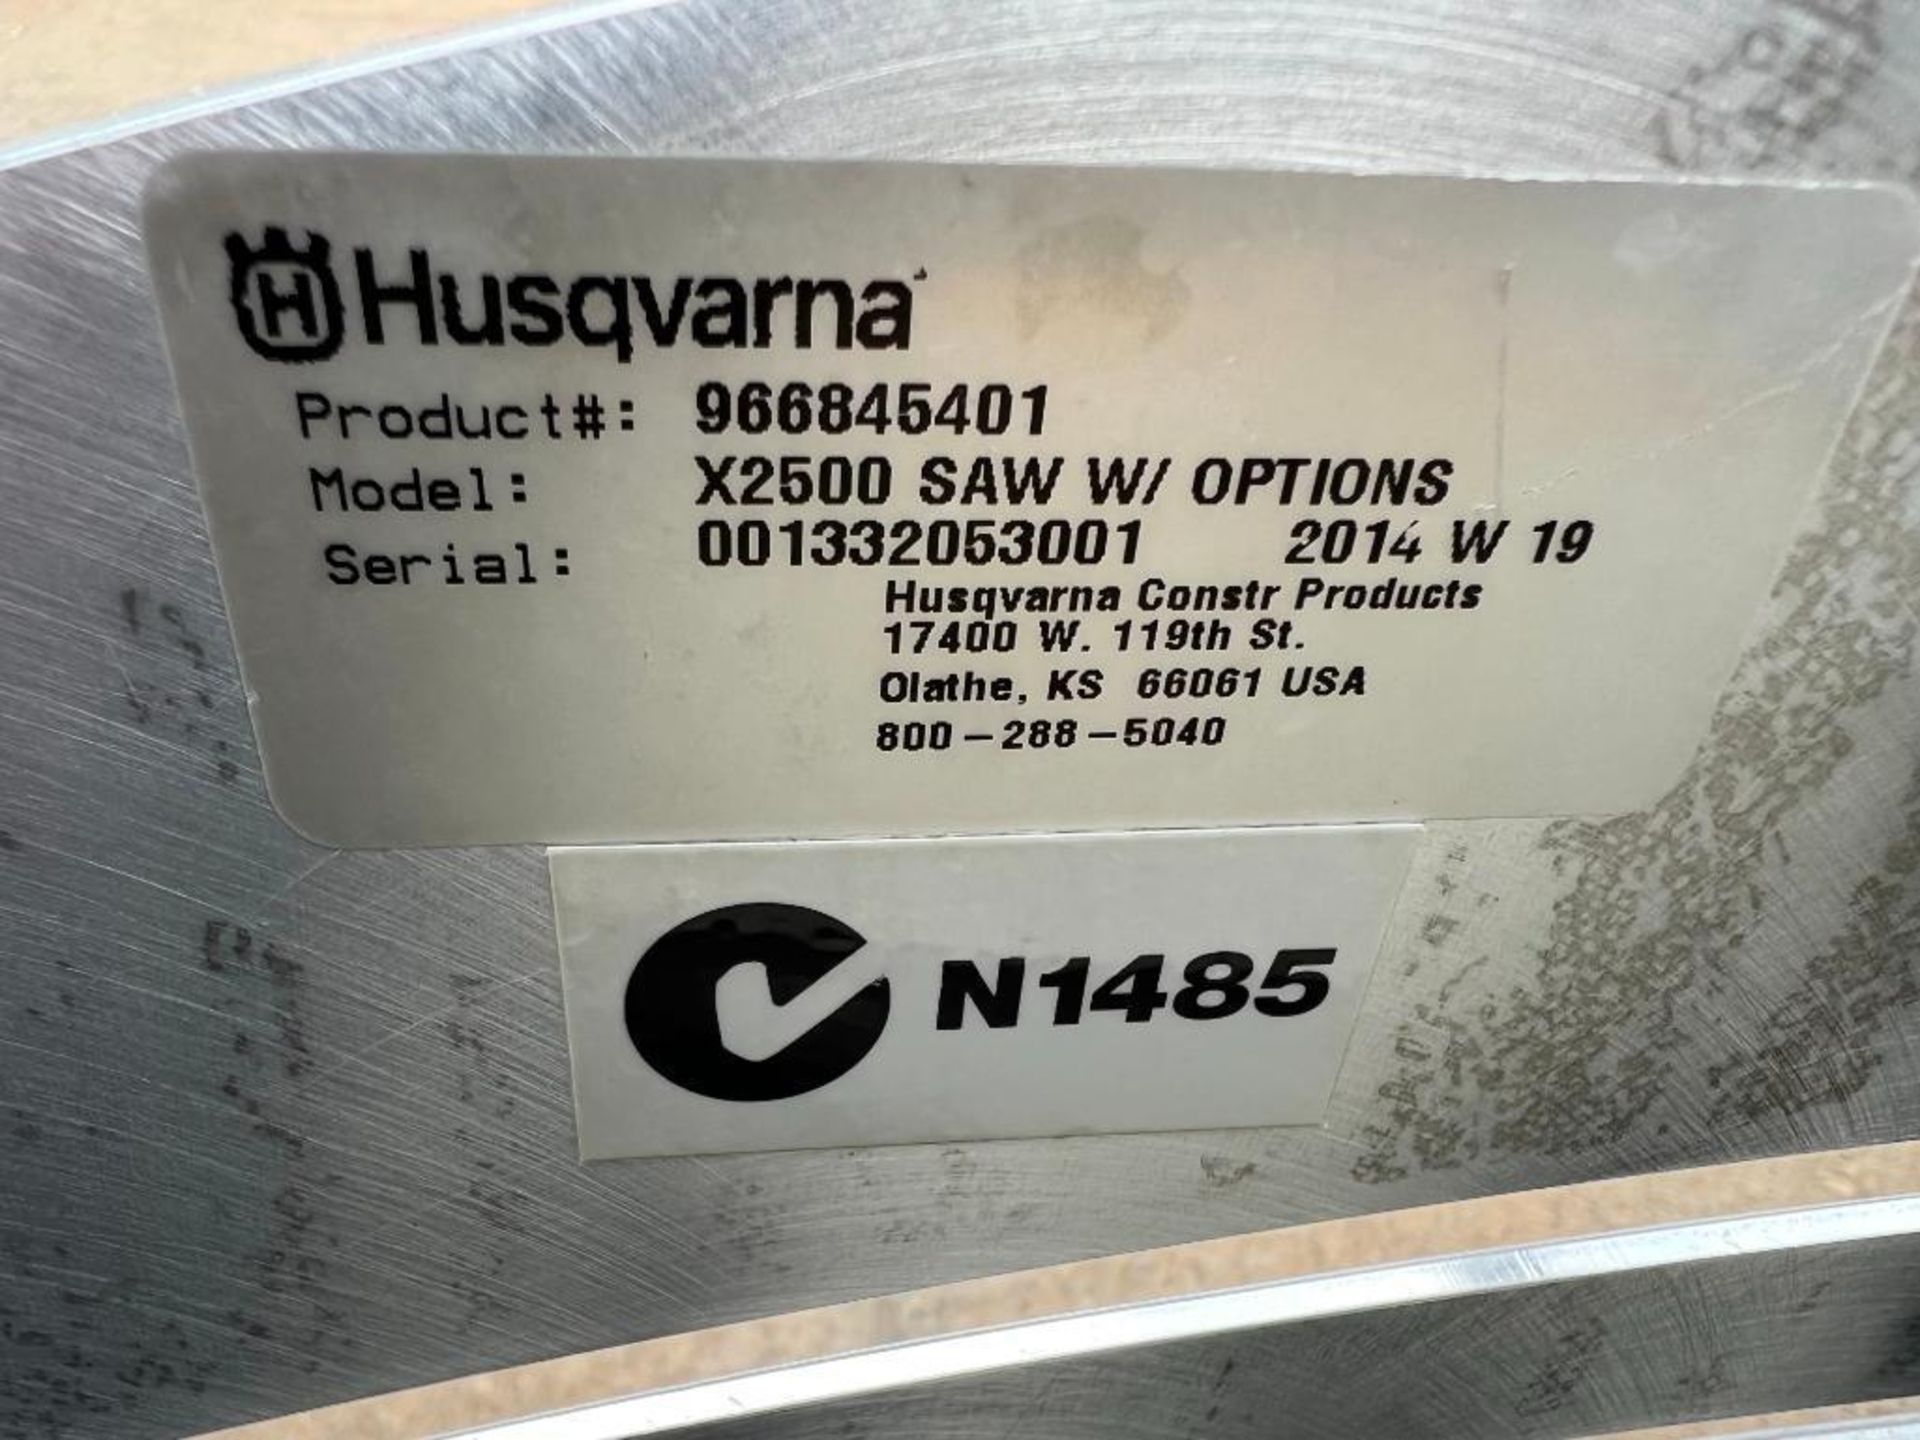 2014 Husqvarna Soff Cut 2500 Saw, Model X2500 Saw w/Options, Serial #001332053001 2014 W 19, Product - Image 7 of 9